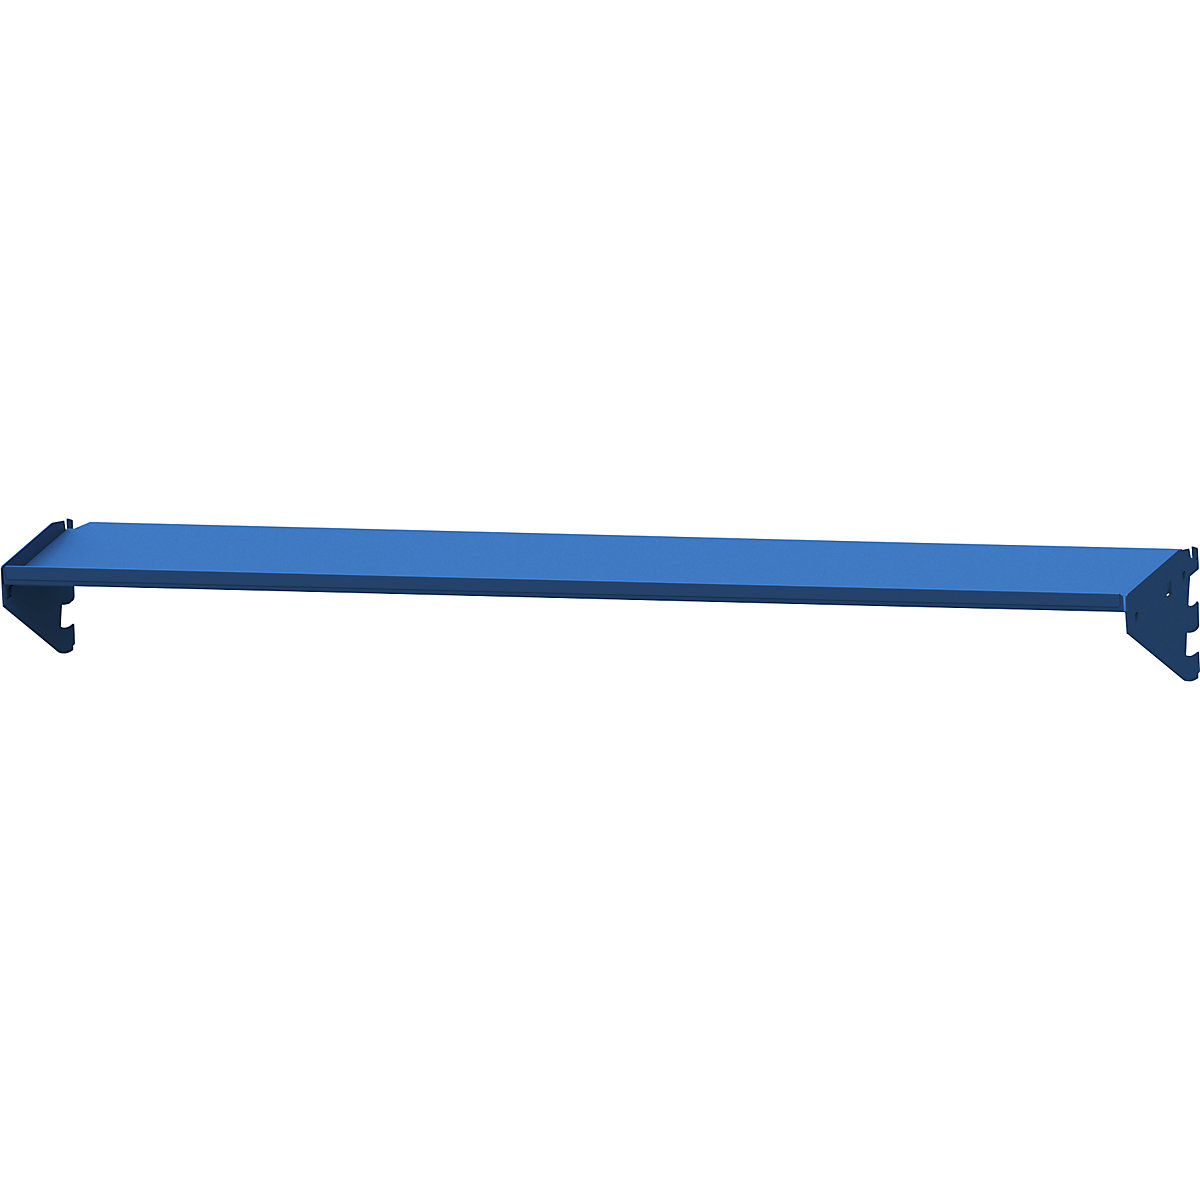 Aflegplateau – ANKE, breedte 1250 mm, diepte 250 mm, blauw-3